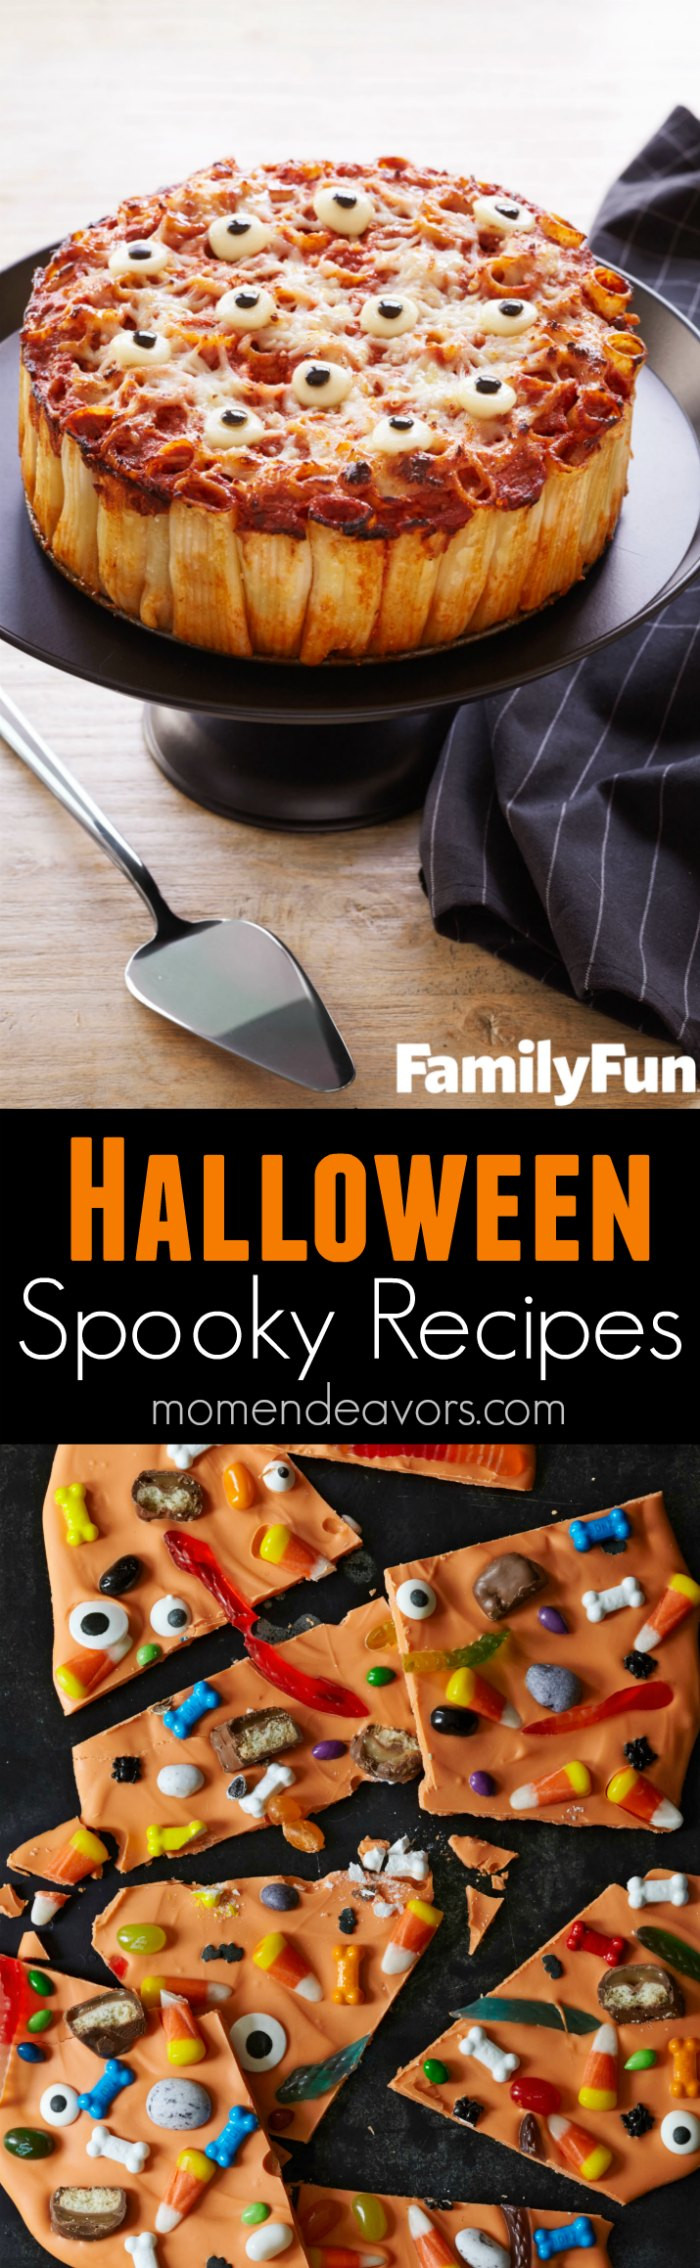 Halloween Party Recipes Ideas
 Spooky Halloween Party Recipes